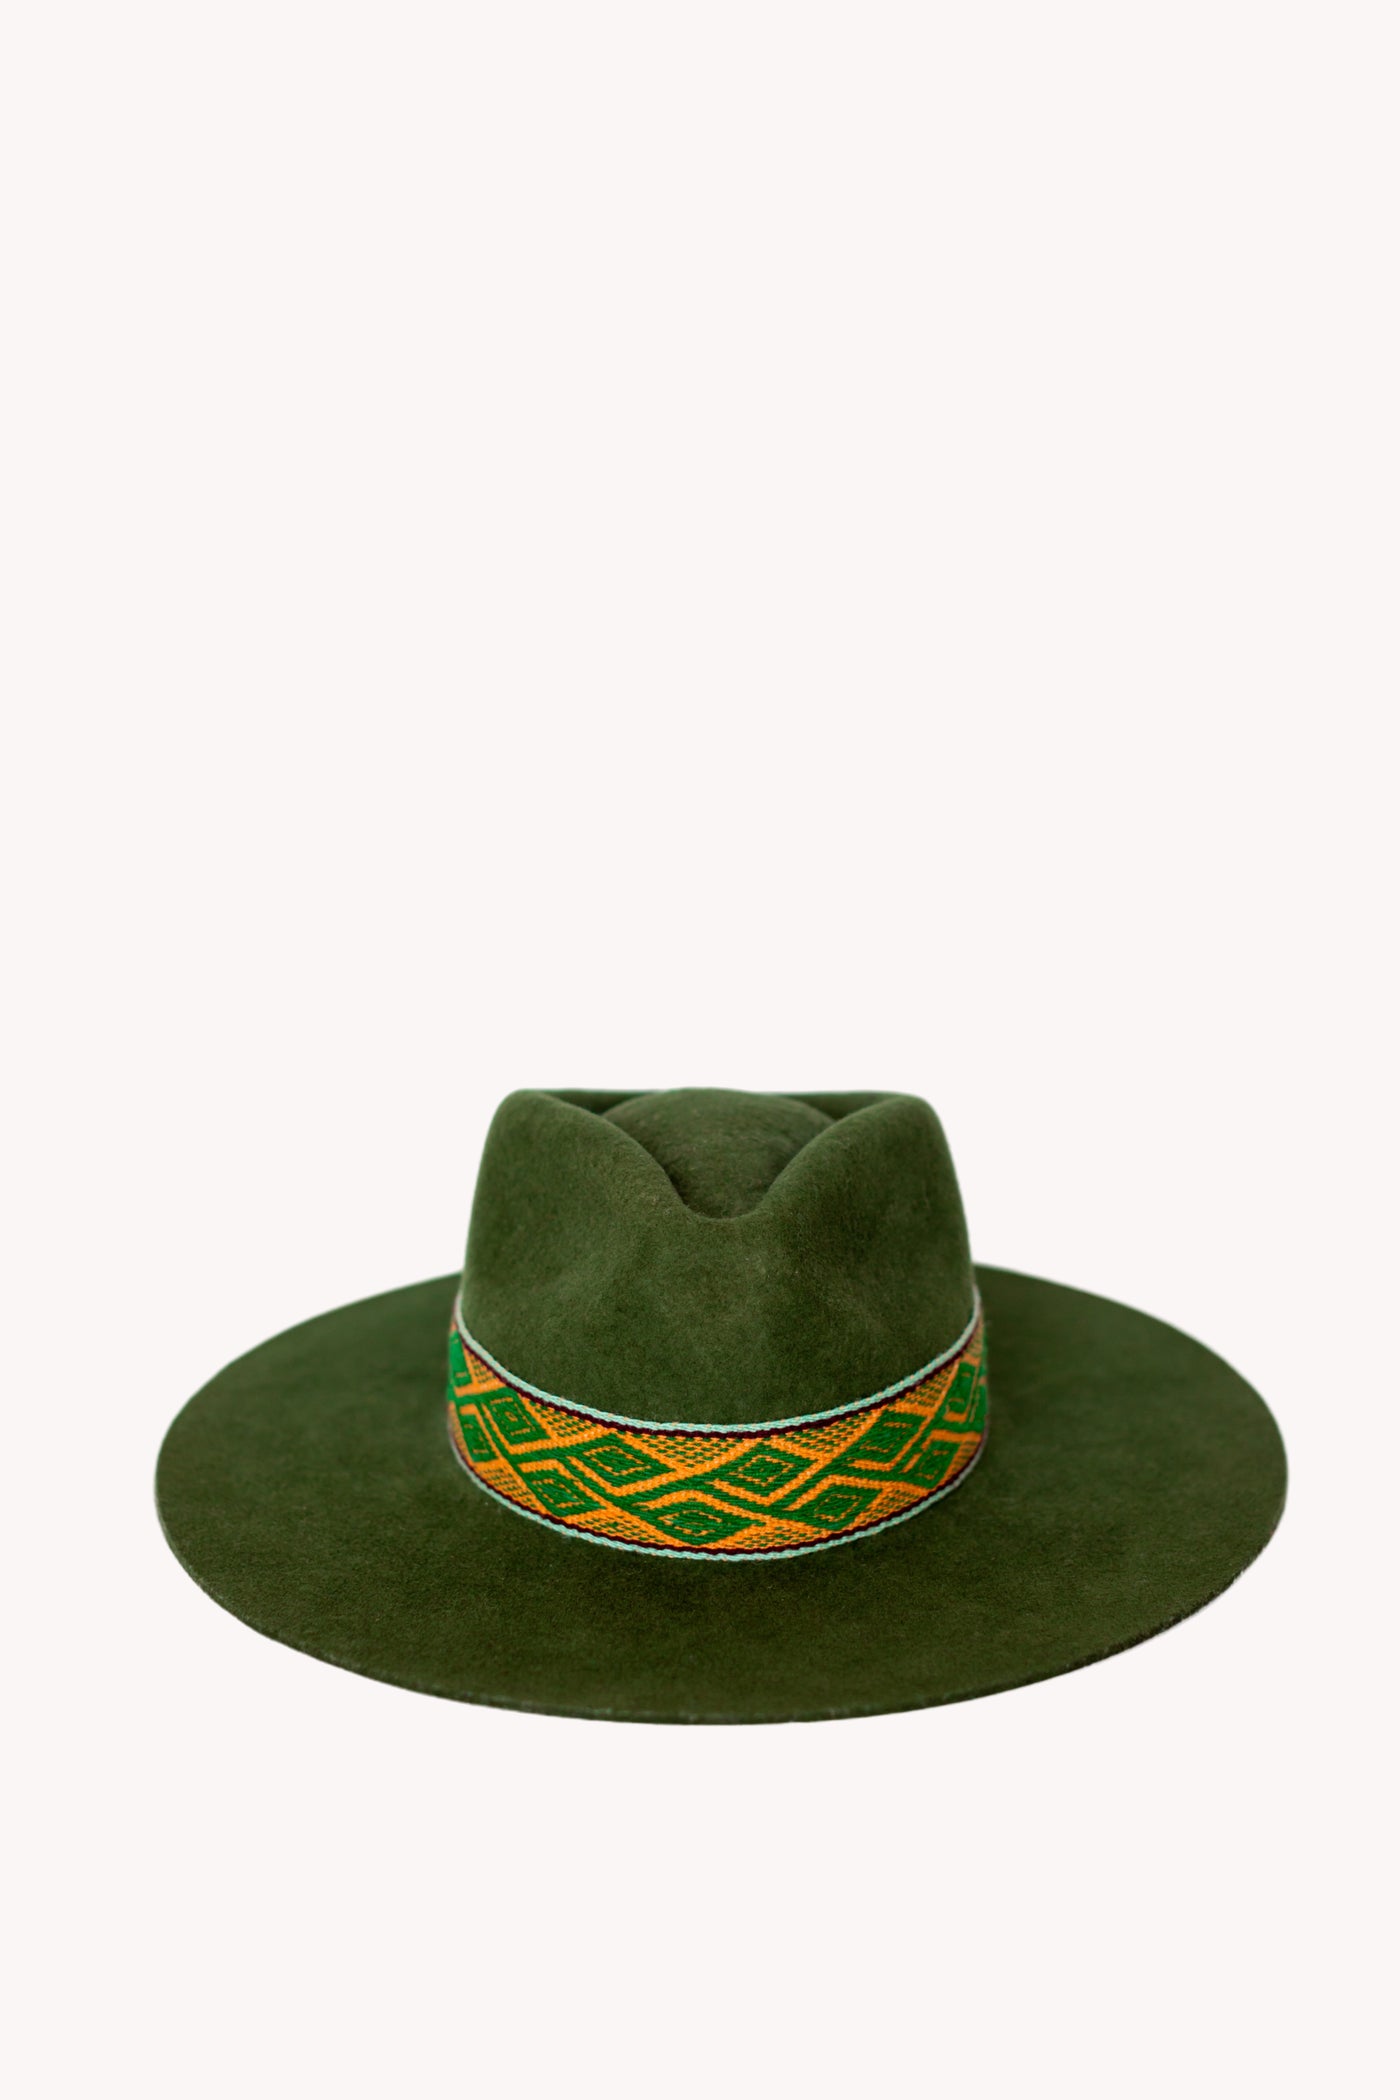 green western style Peruvian hat